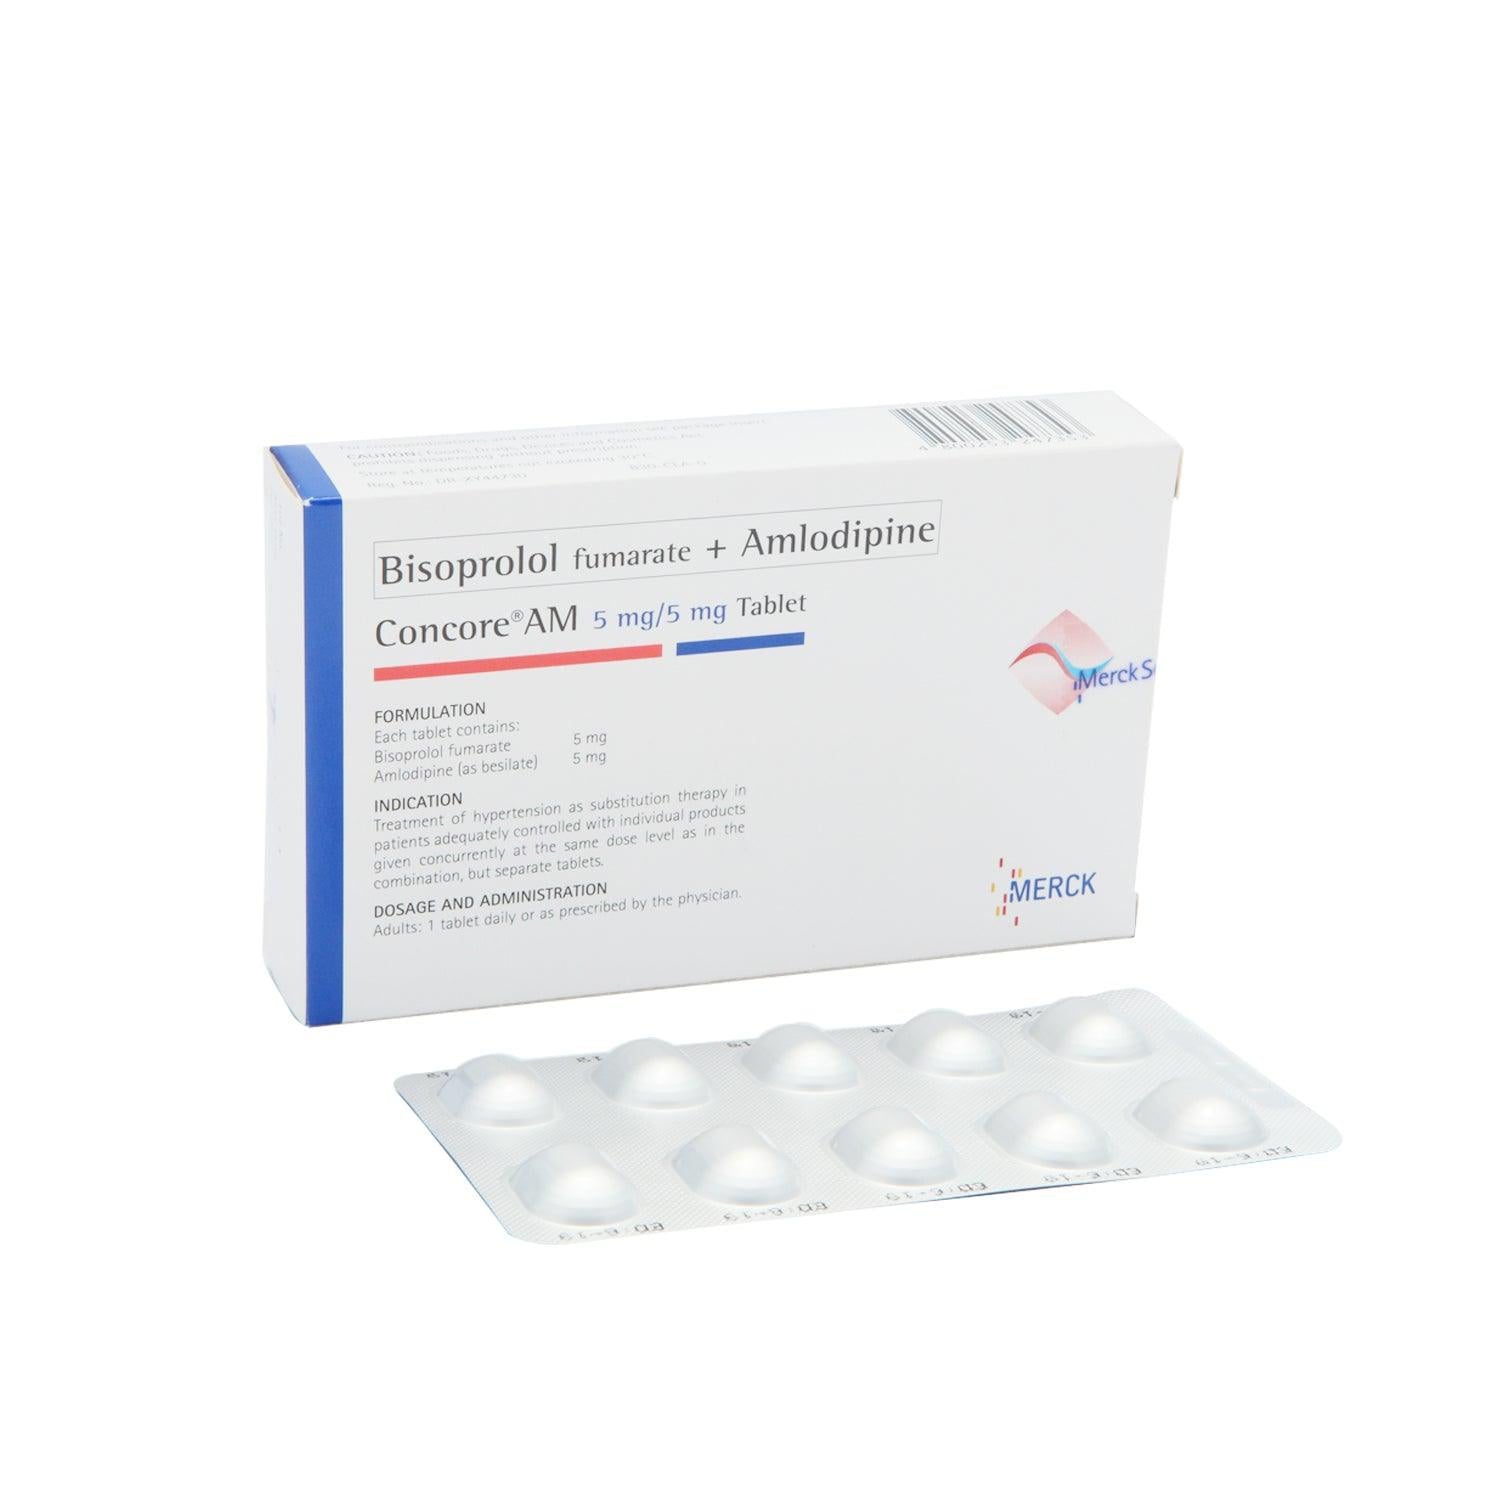 Bisoprolol fumarate 5 mg